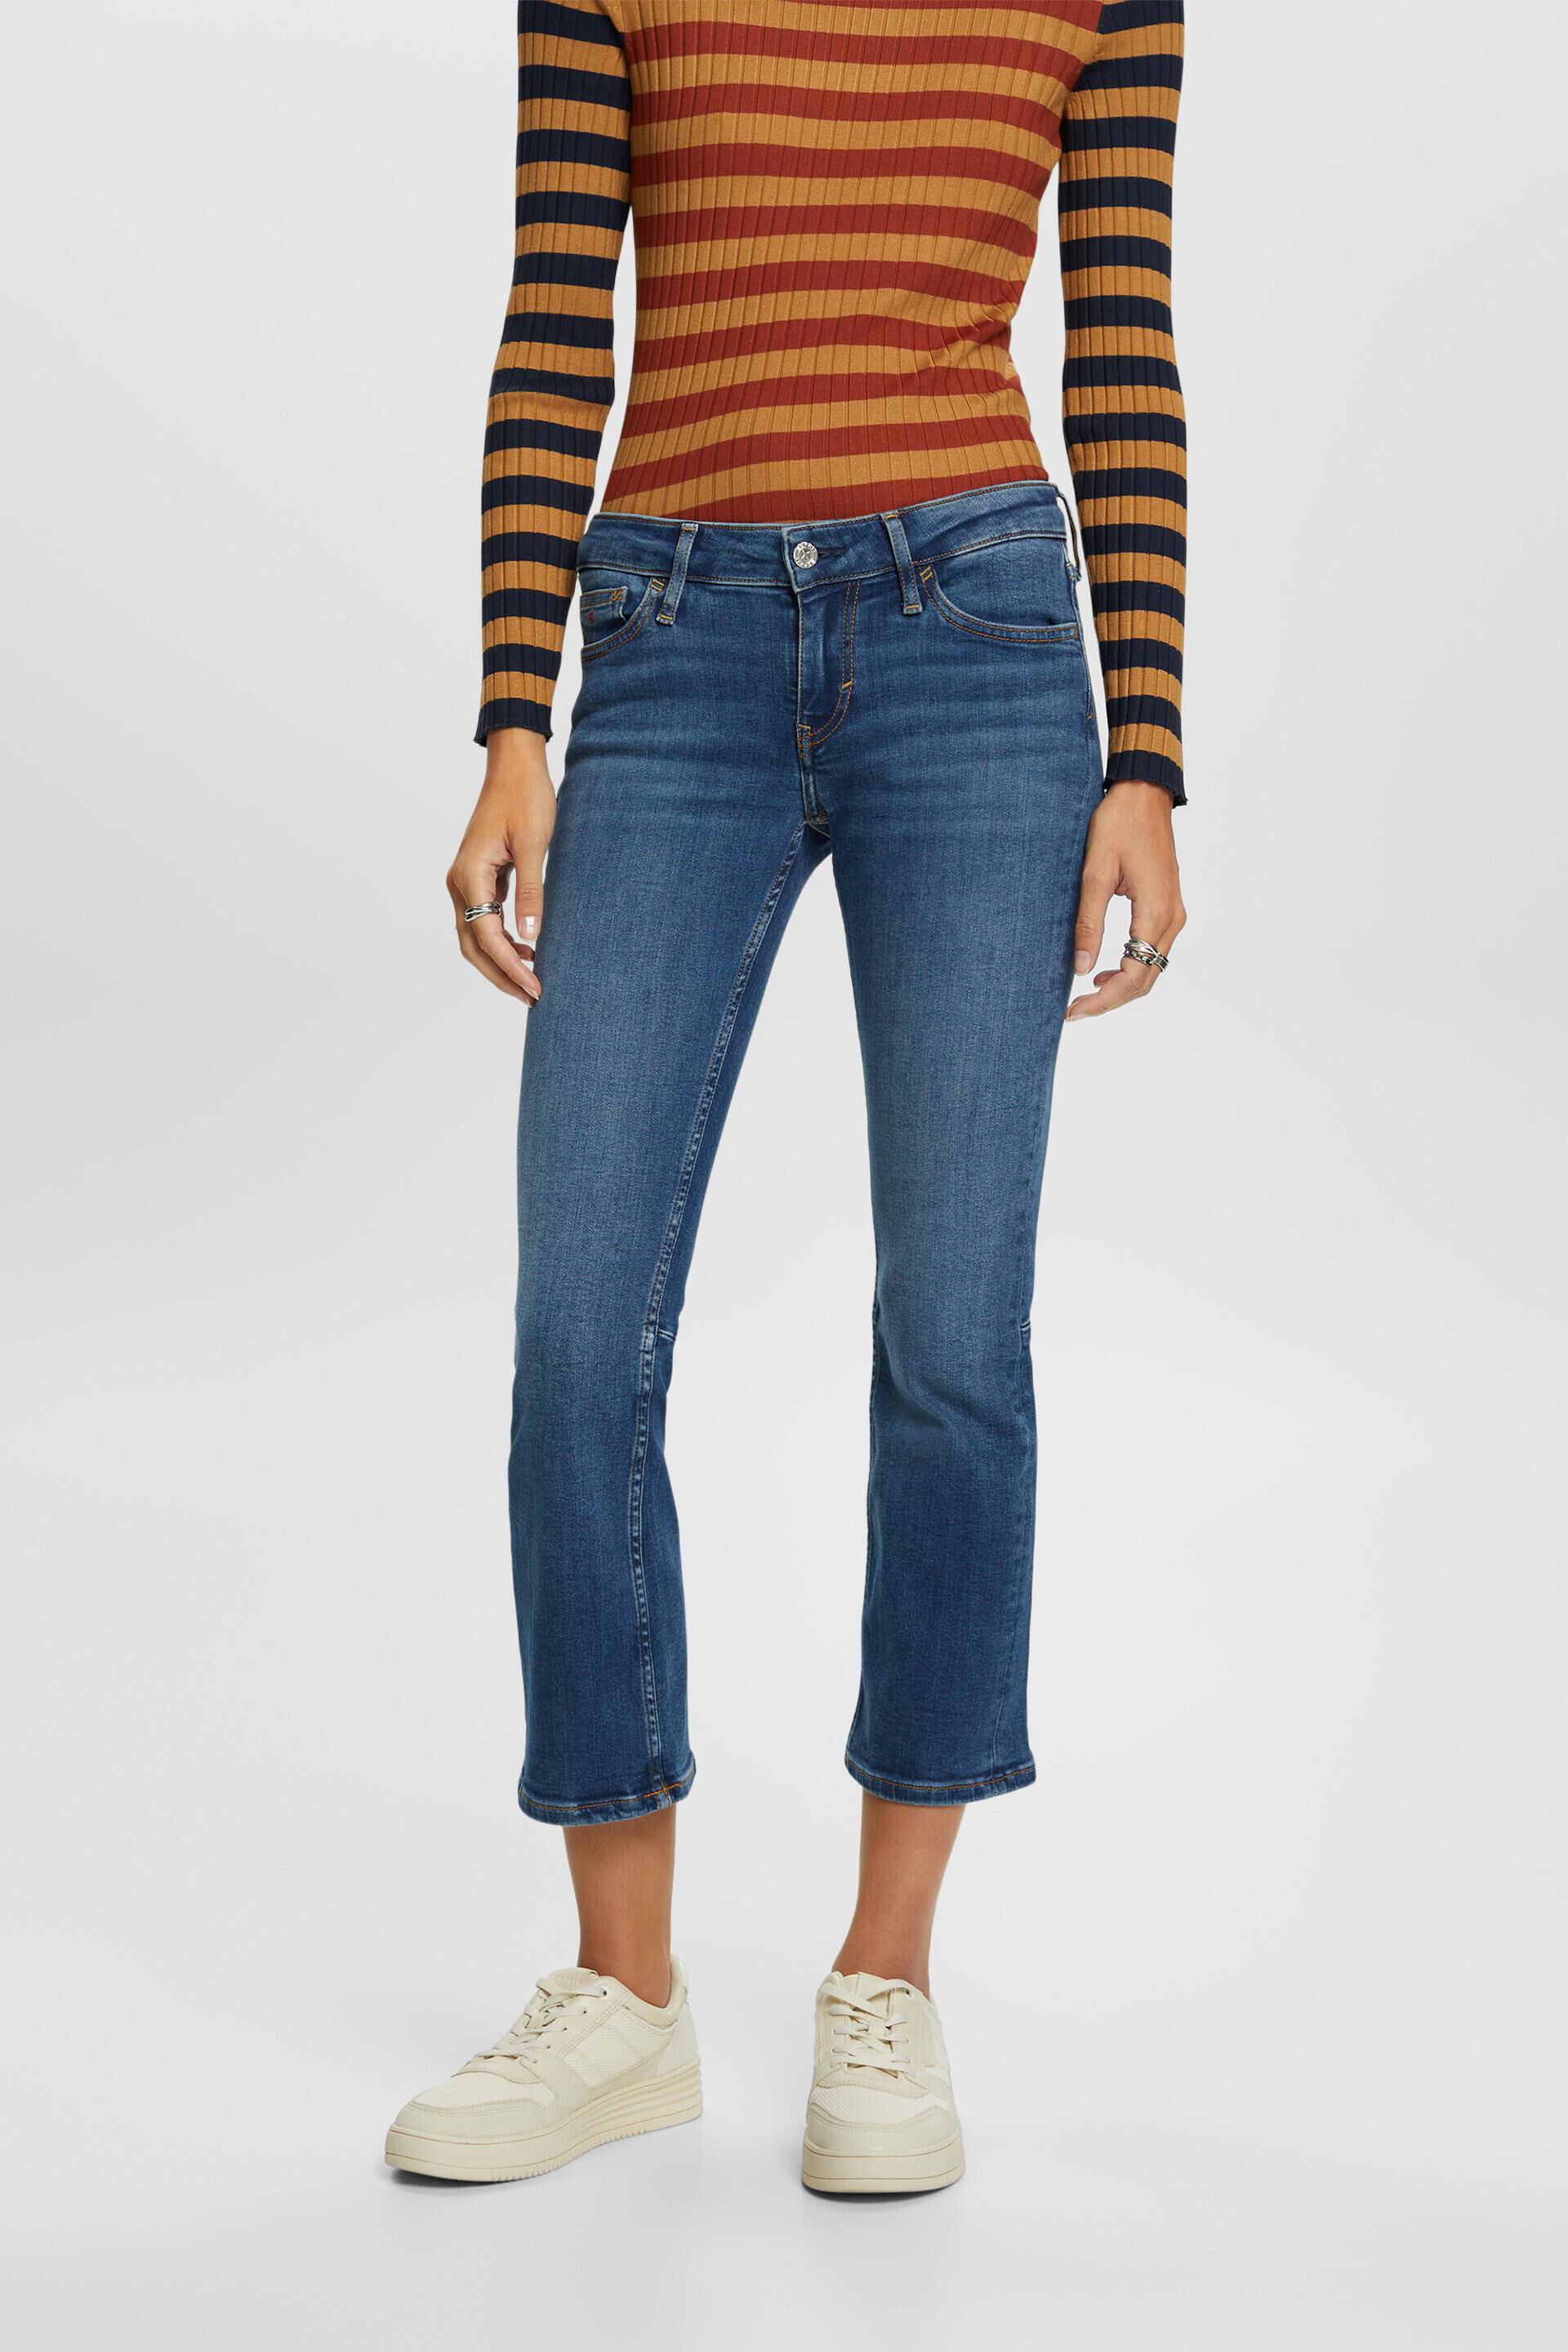 Esprit Damen Premium cropped bootcut jeans